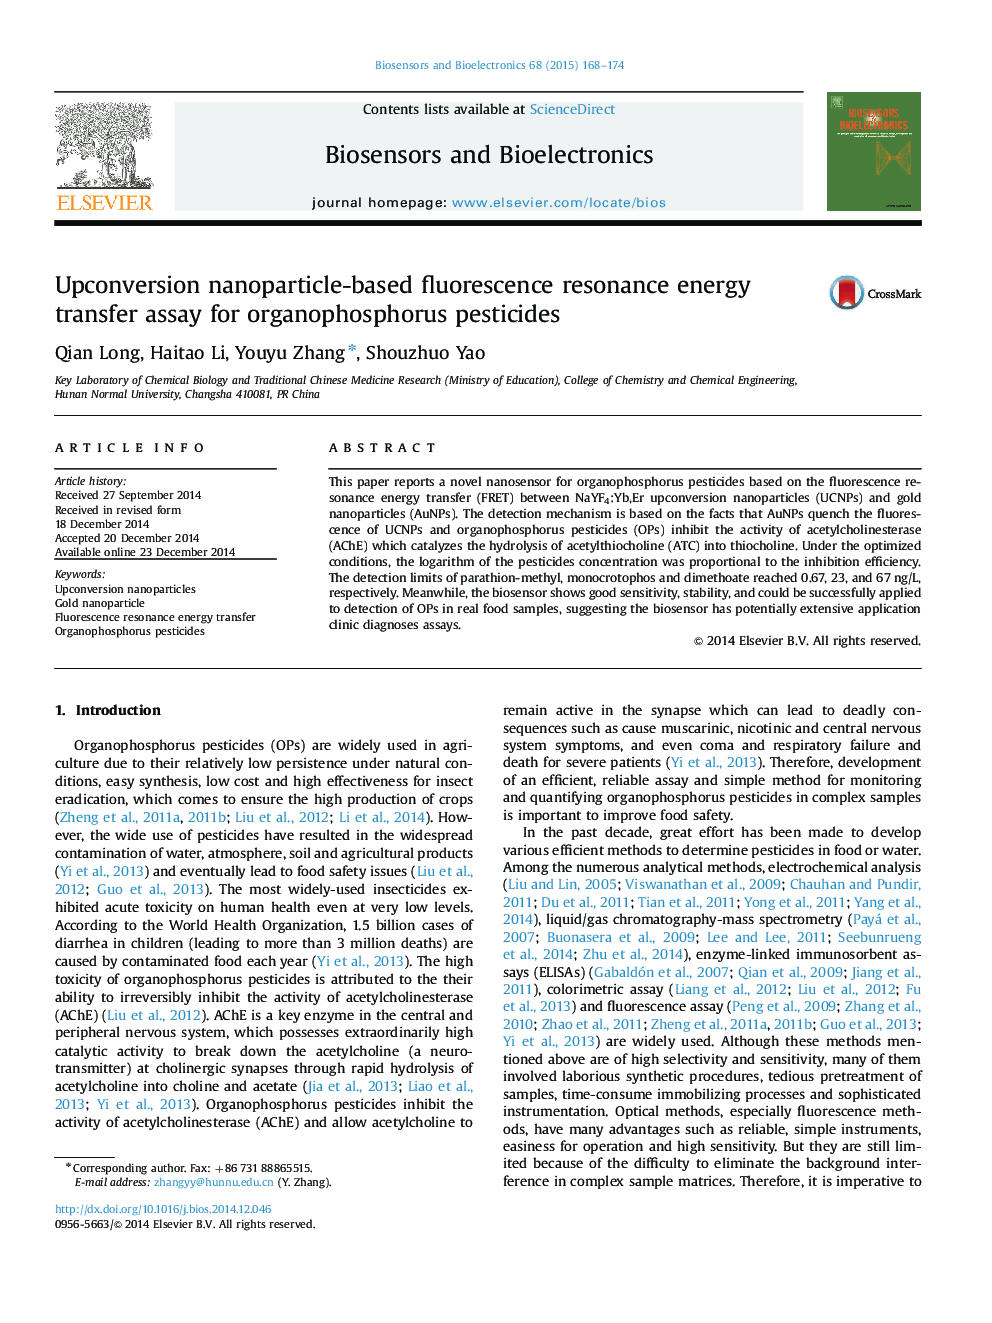 Upconversion nanoparticle-based fluorescence resonance energy transfer assay for organophosphorus pesticides